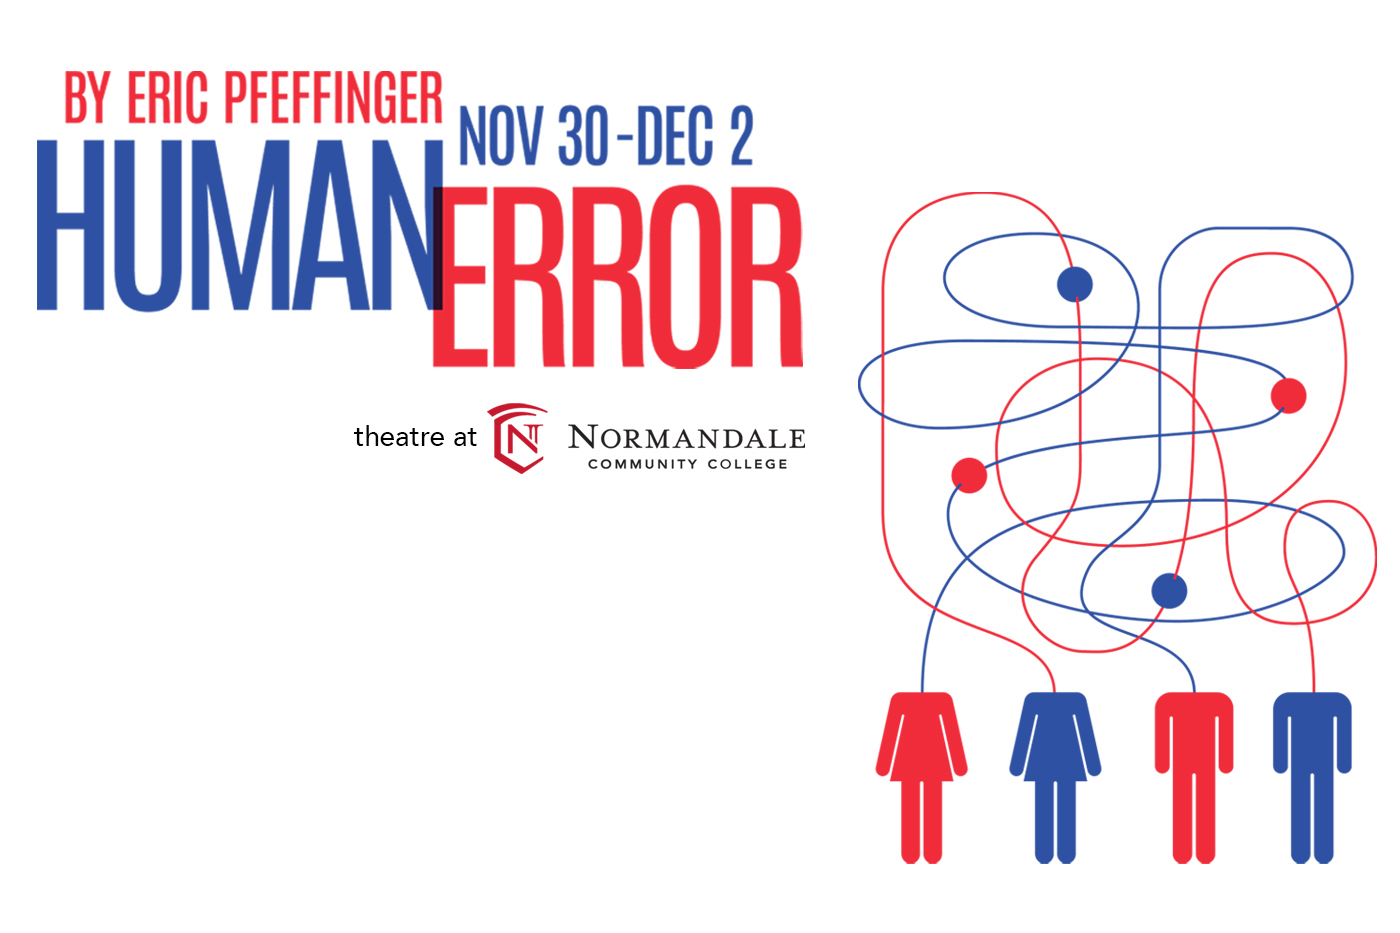 Human Error Theatre Poster